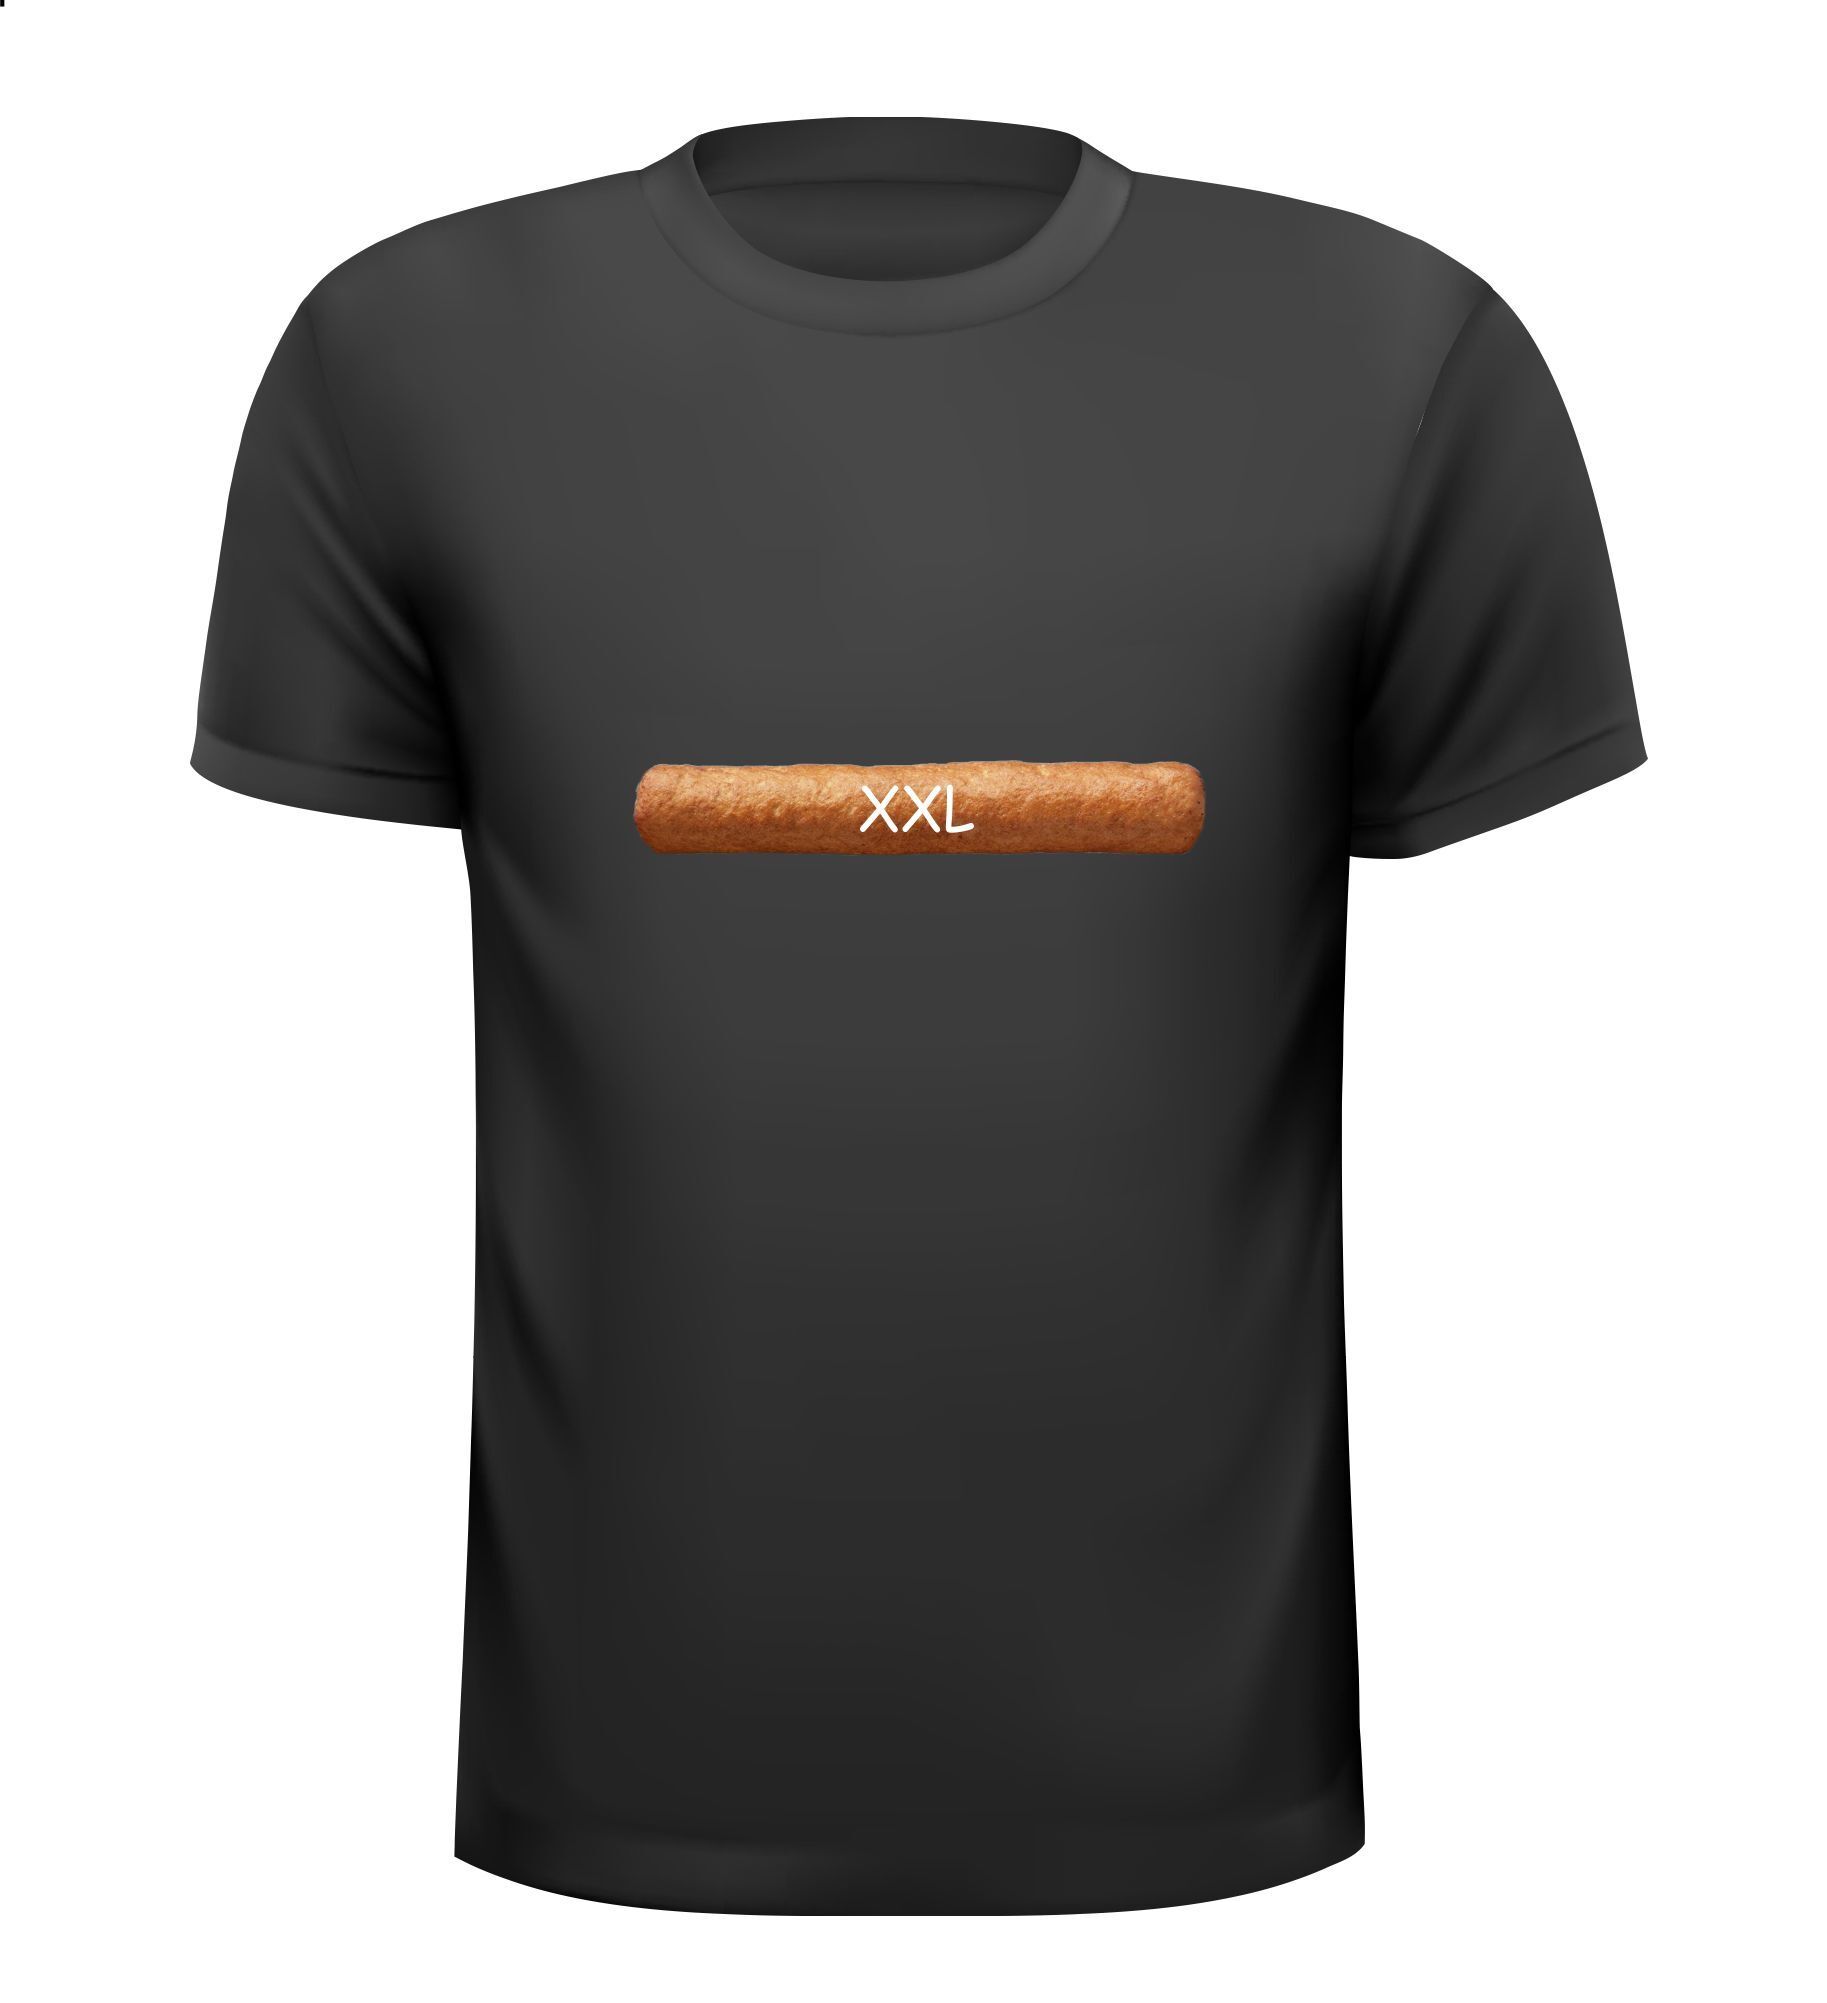 T-shirt frikandel frikandellen xxl fastfood grappig